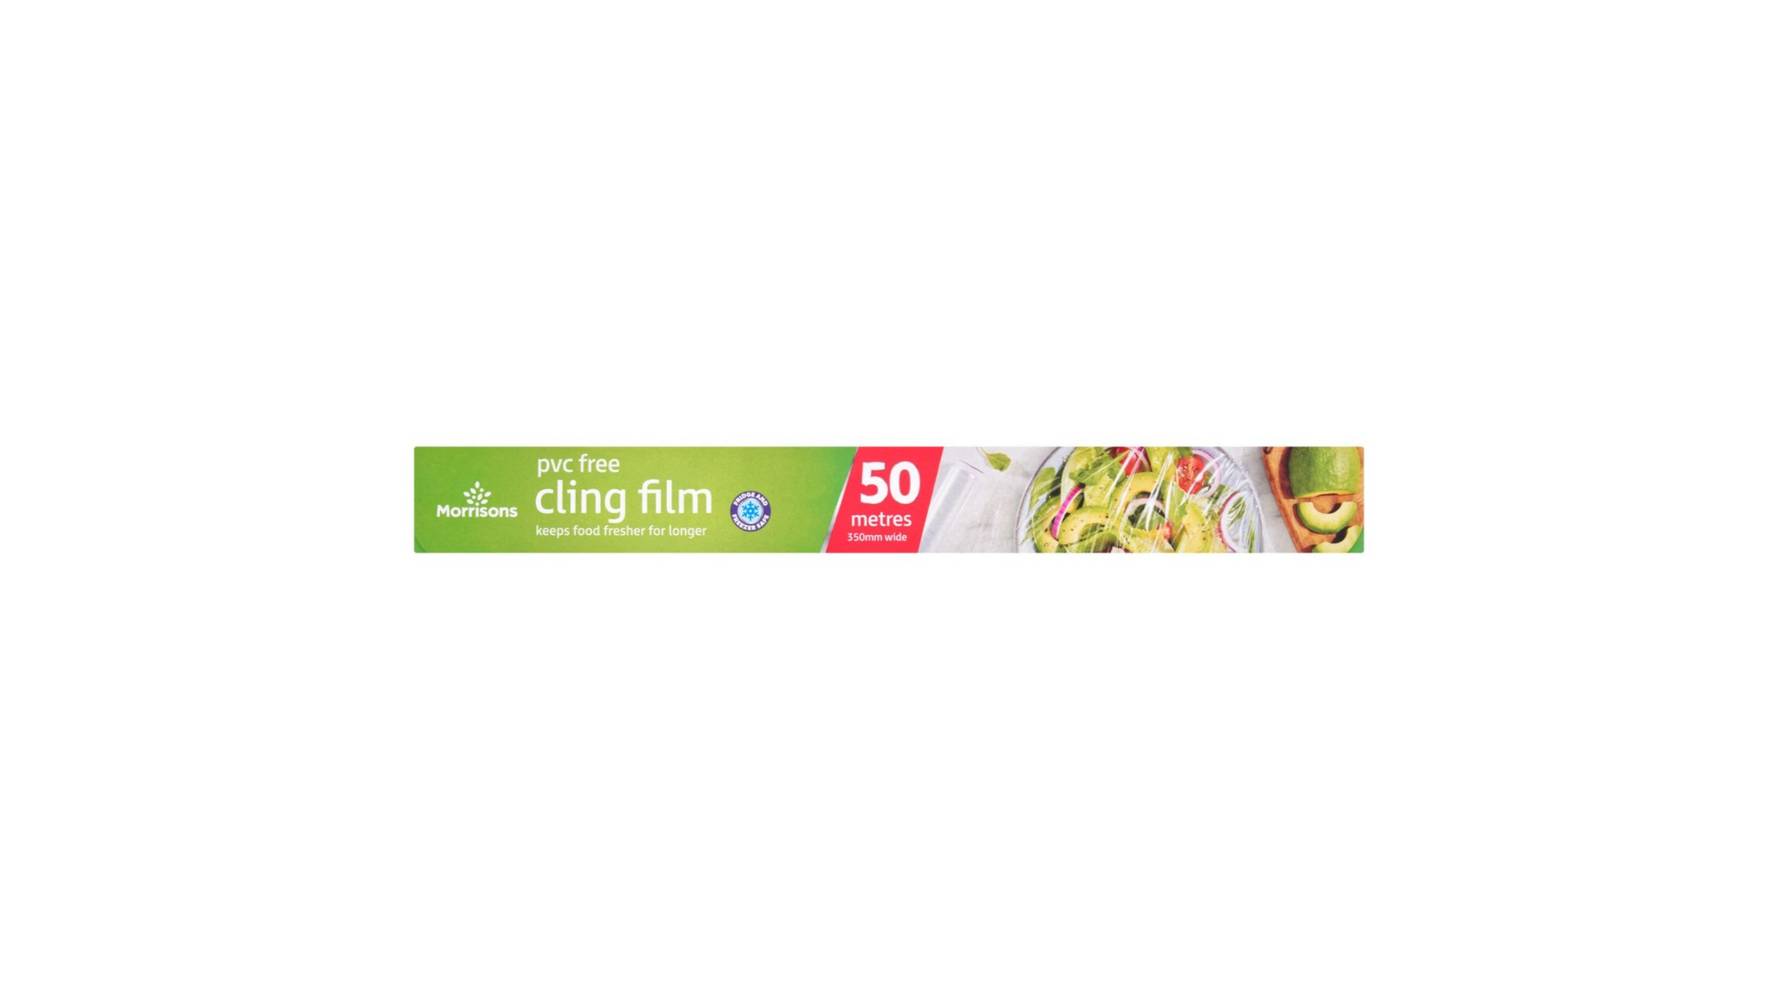 Morrisons Pvc Free Cling Film 50m